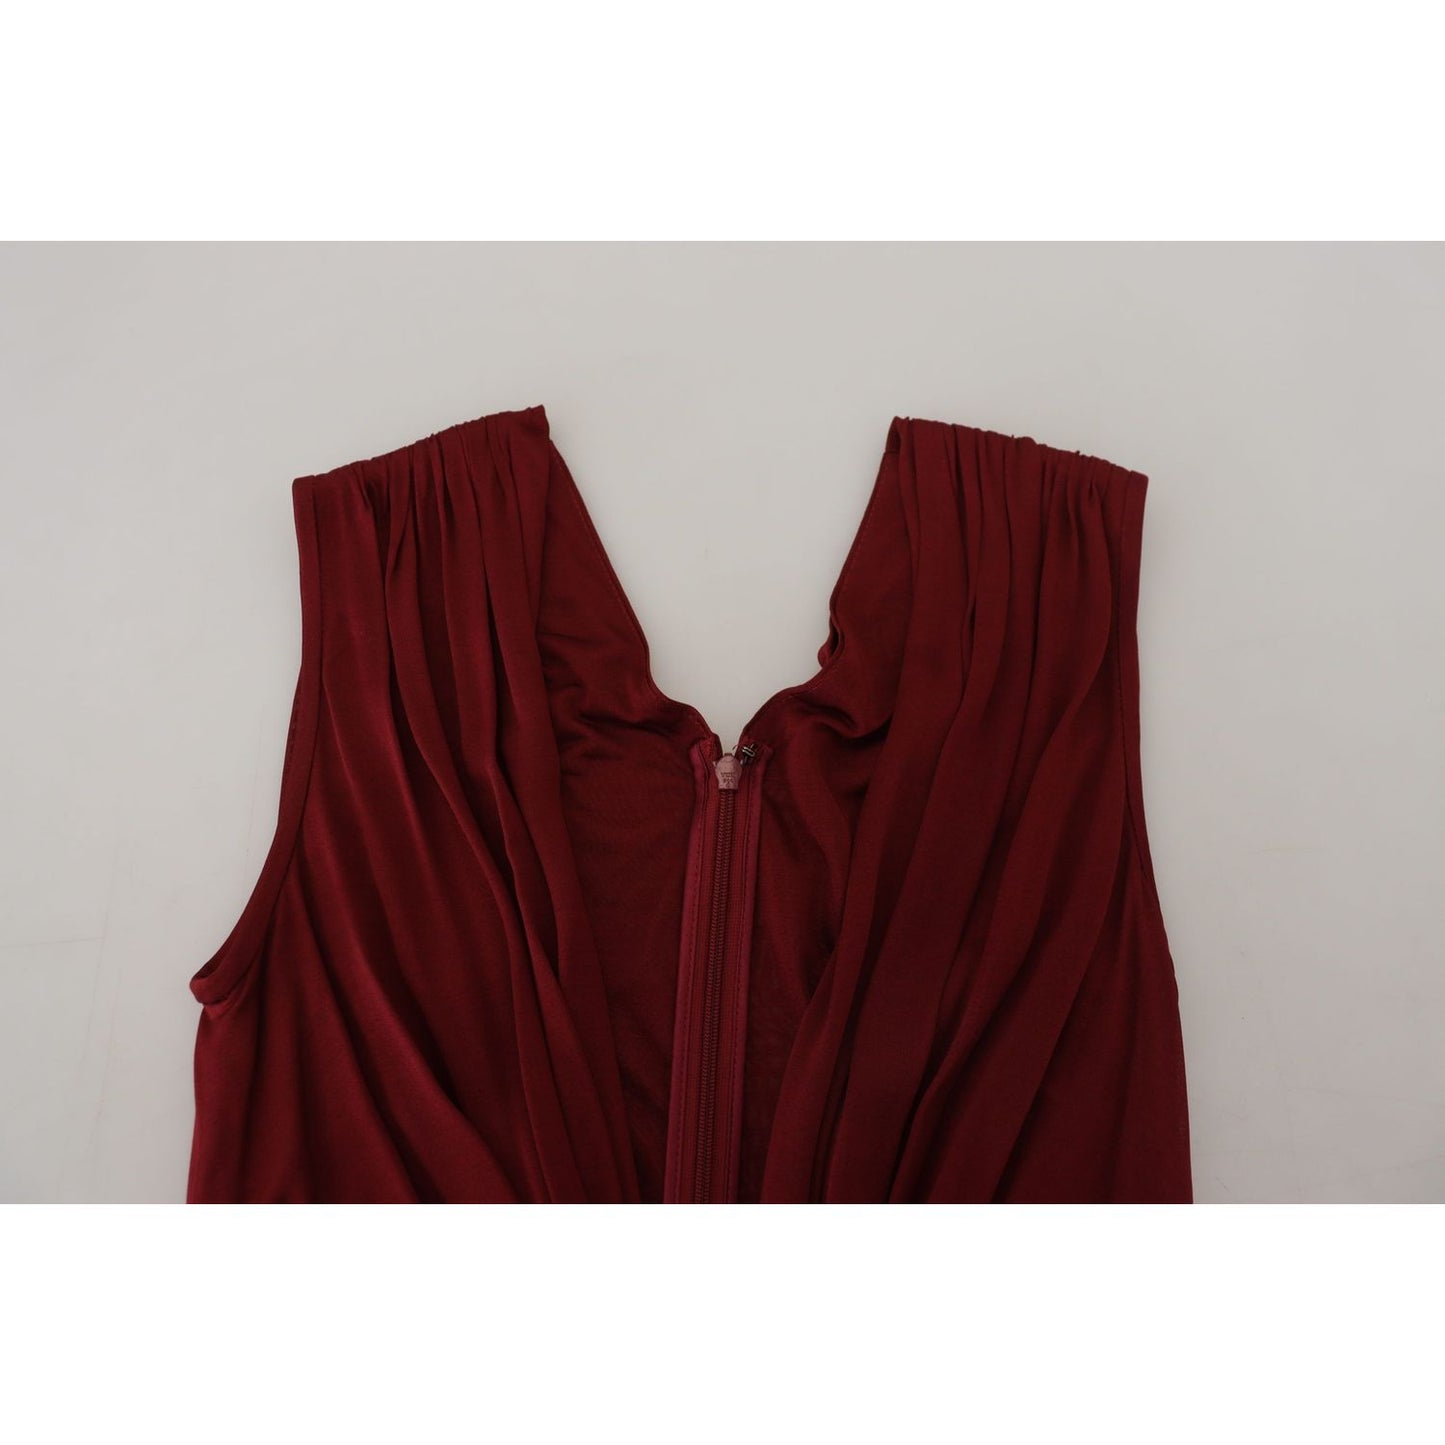 Dolce & Gabbana Bordeaux Silk Blend Top Blouse bordeaux-silk-stretch-top-vest-blouse IMG_5934-scaled-714ce62b-908.jpg